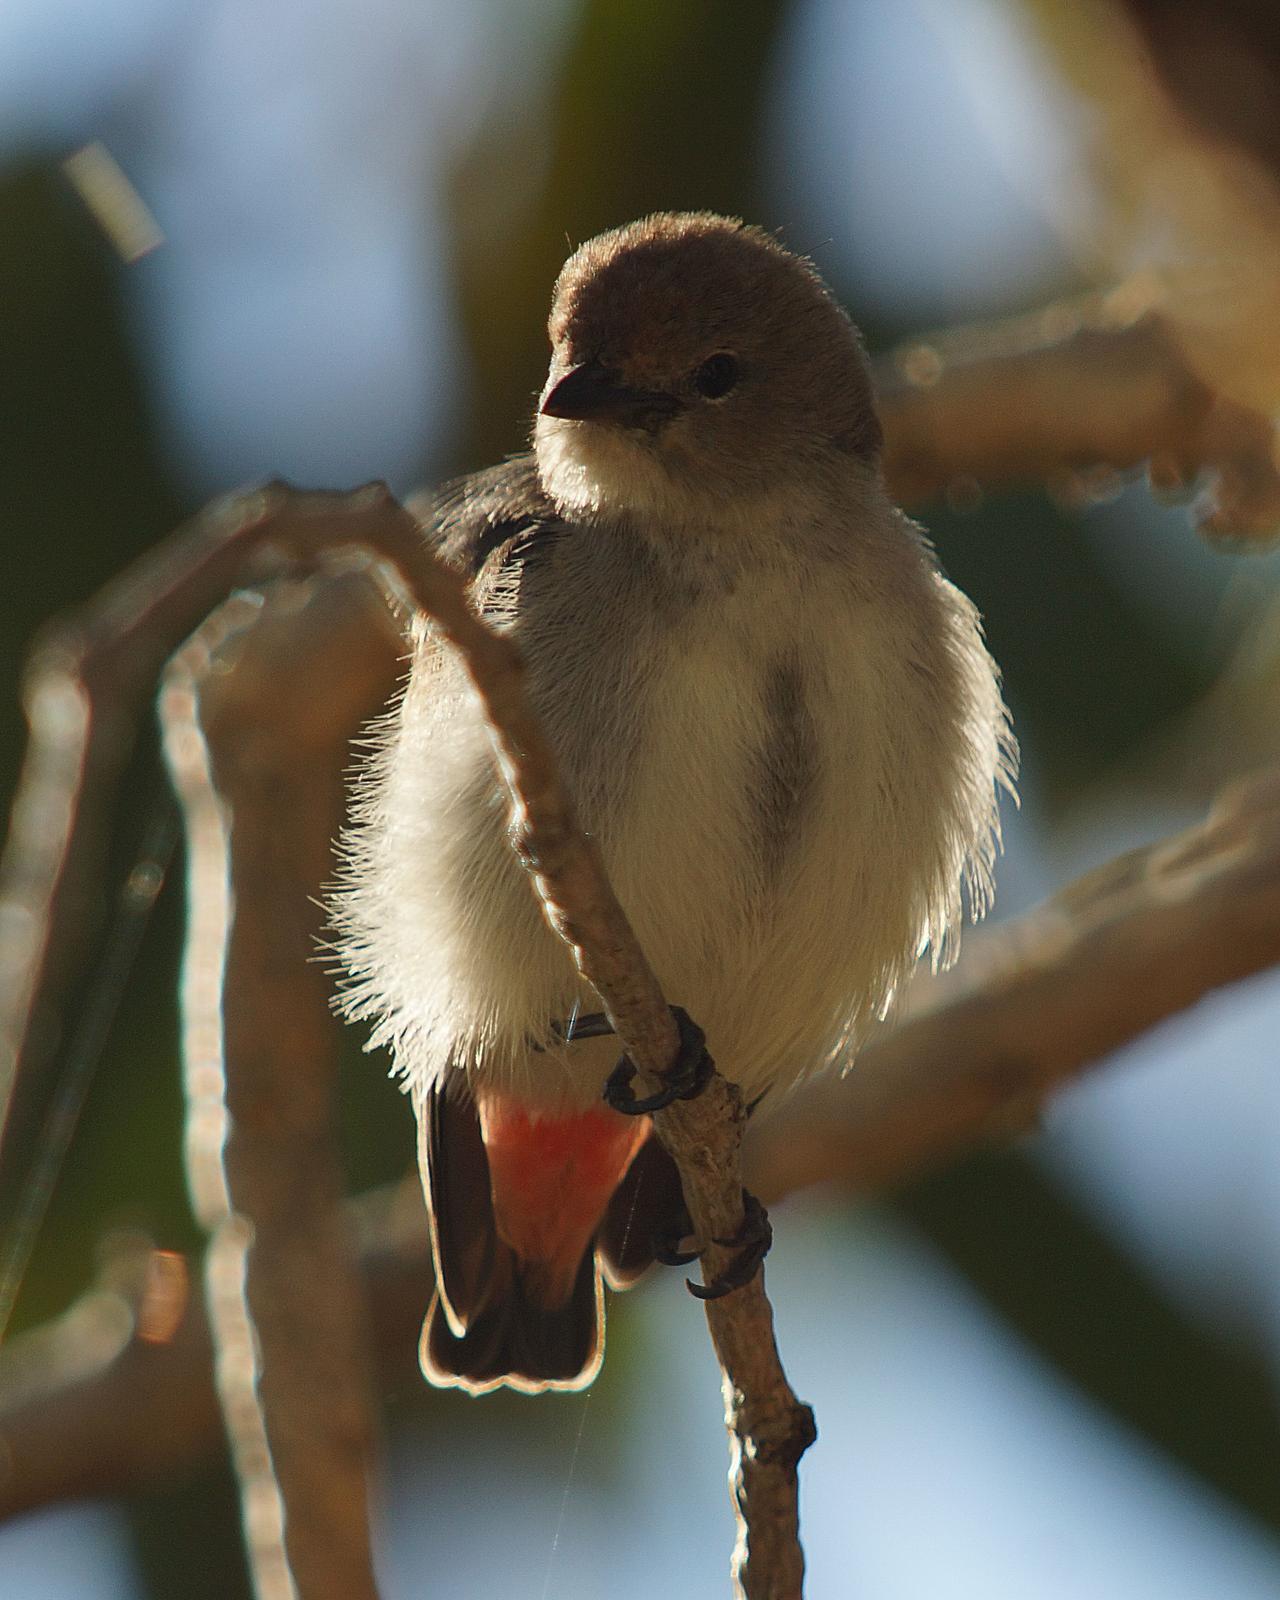 Mistletoebird Photo by Steve Percival